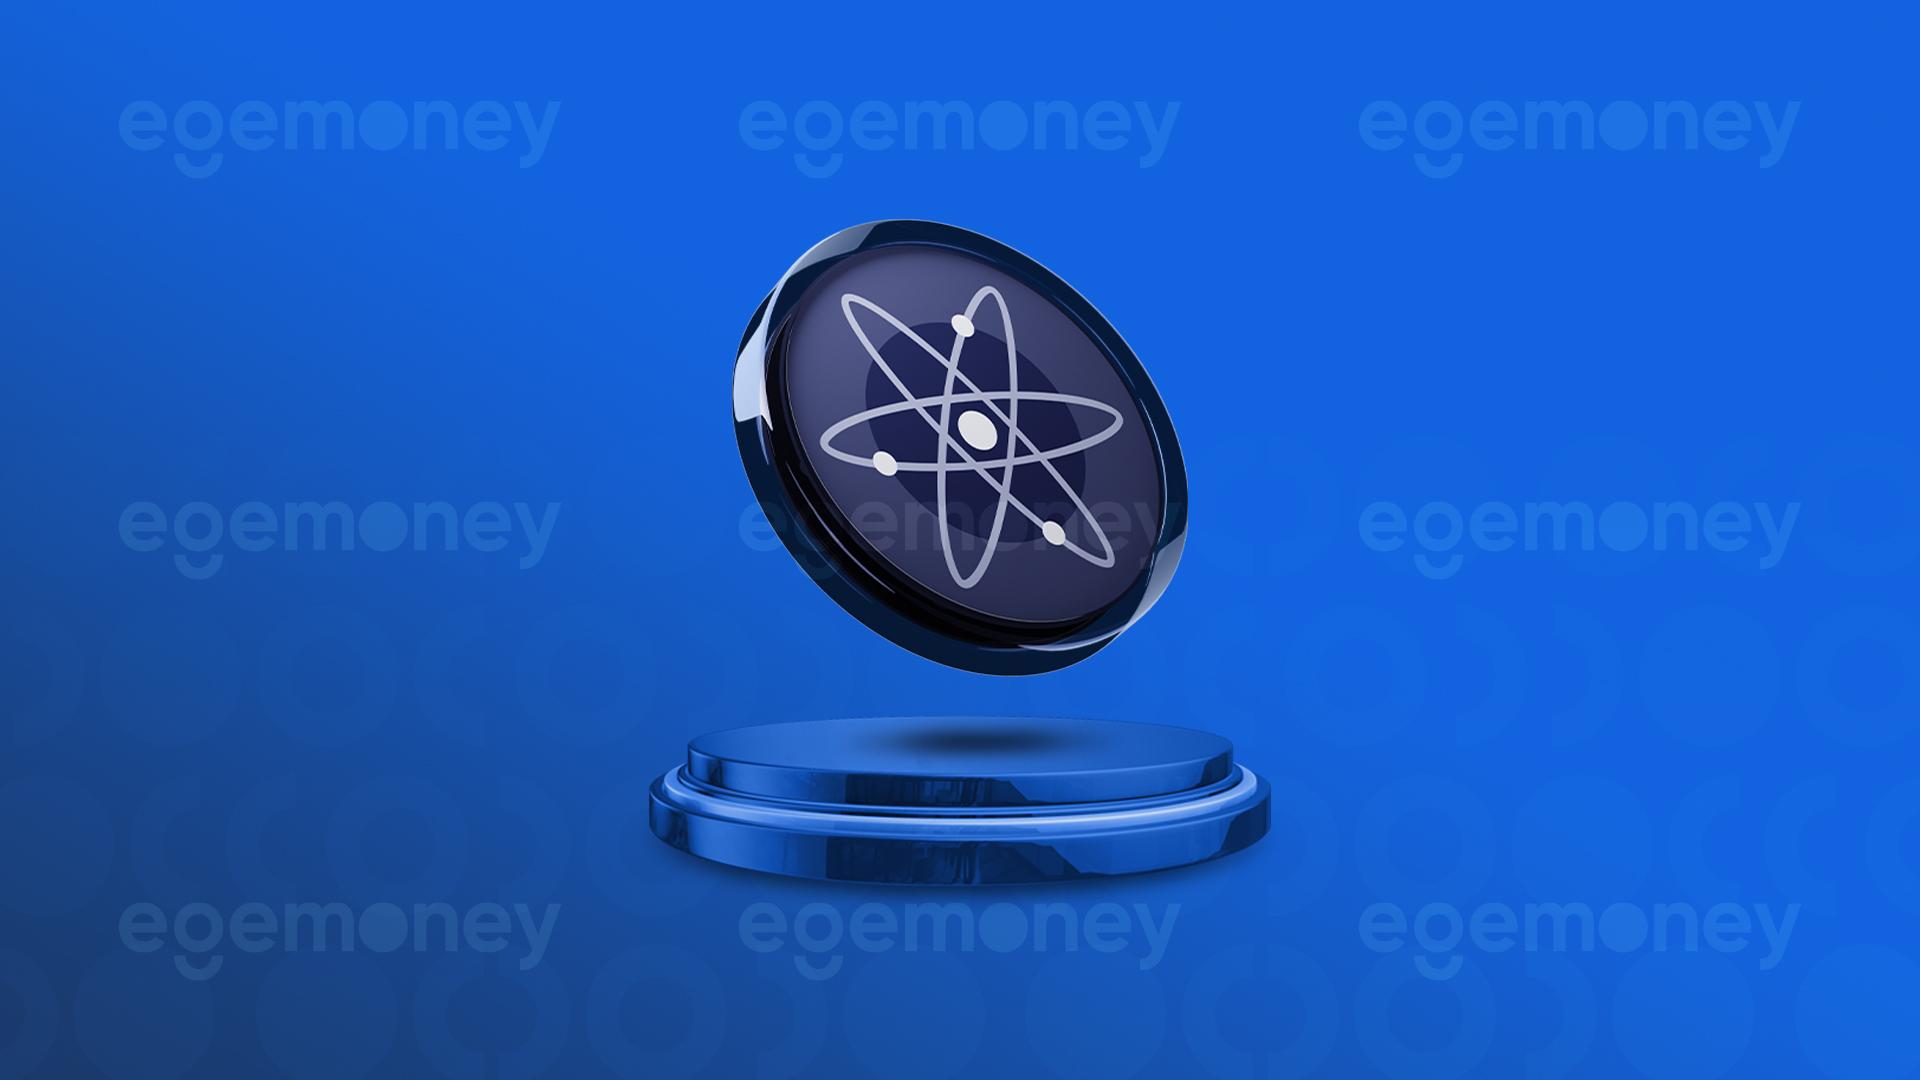 EgeMoney Now Offers Cosmos (ATOM) Transactions!